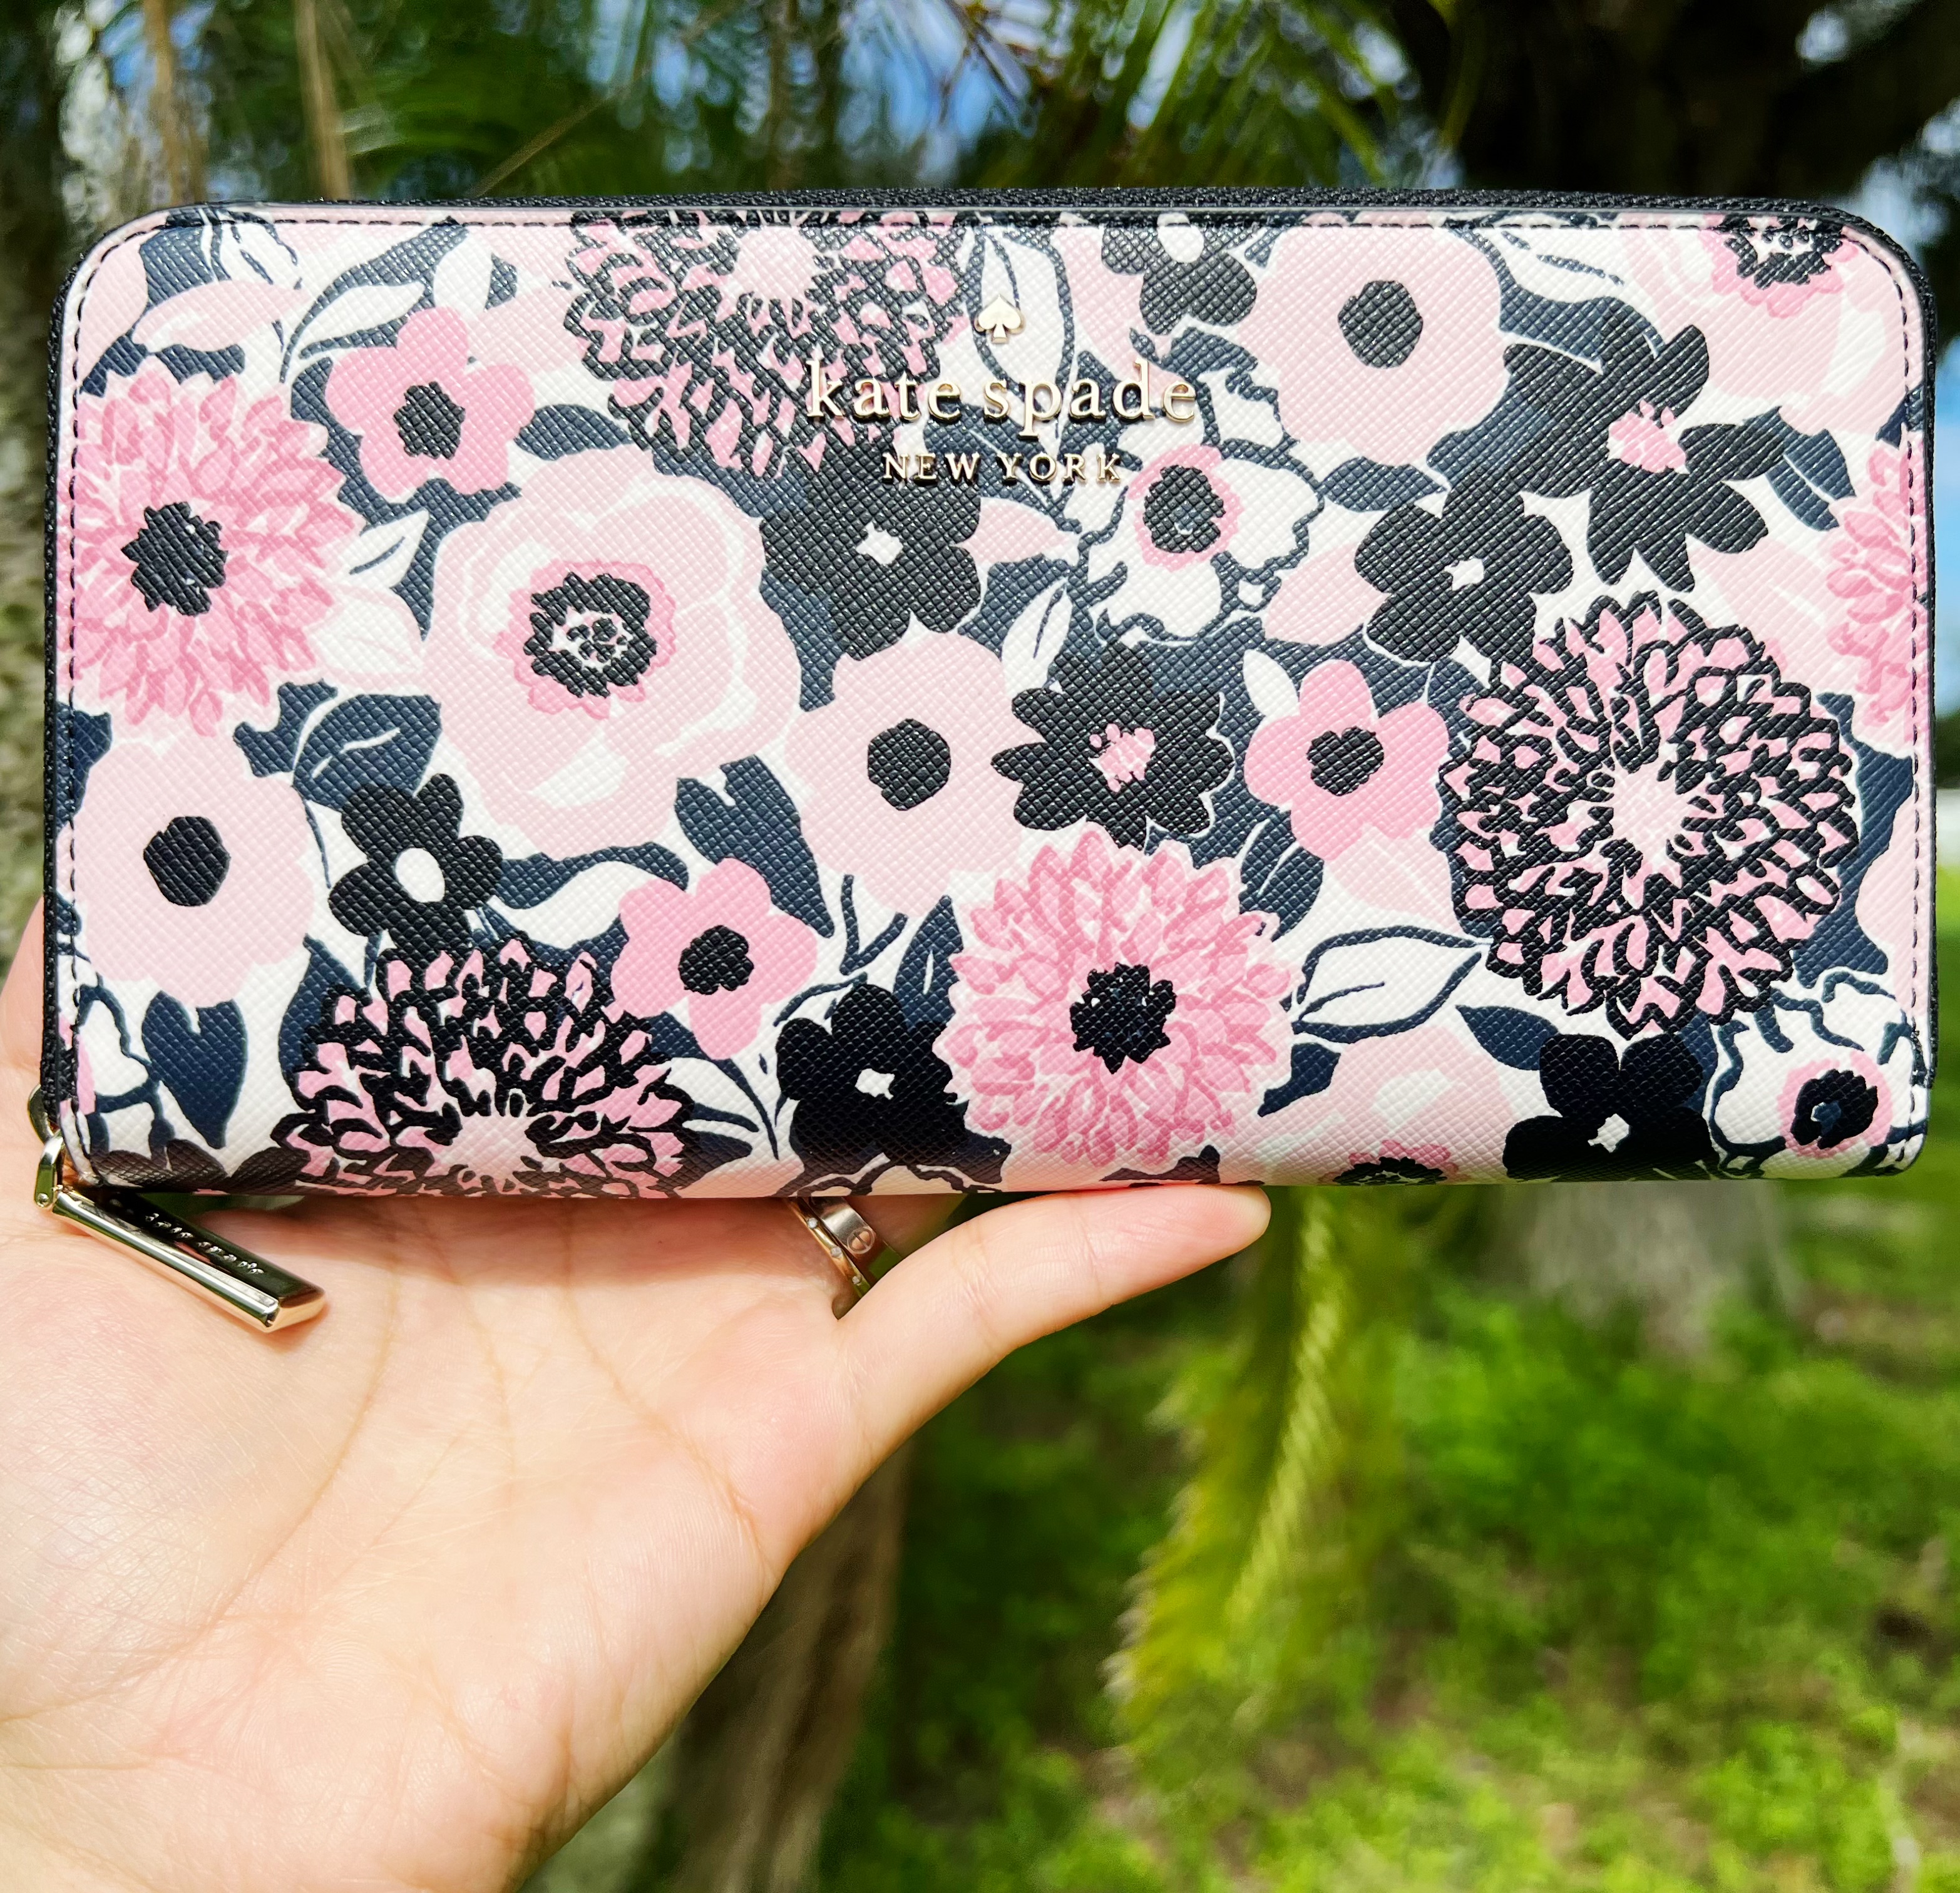 Kate Spade Perfect Large Top Zip Tote Bag Pink Black Dahlia Floral + Wallet